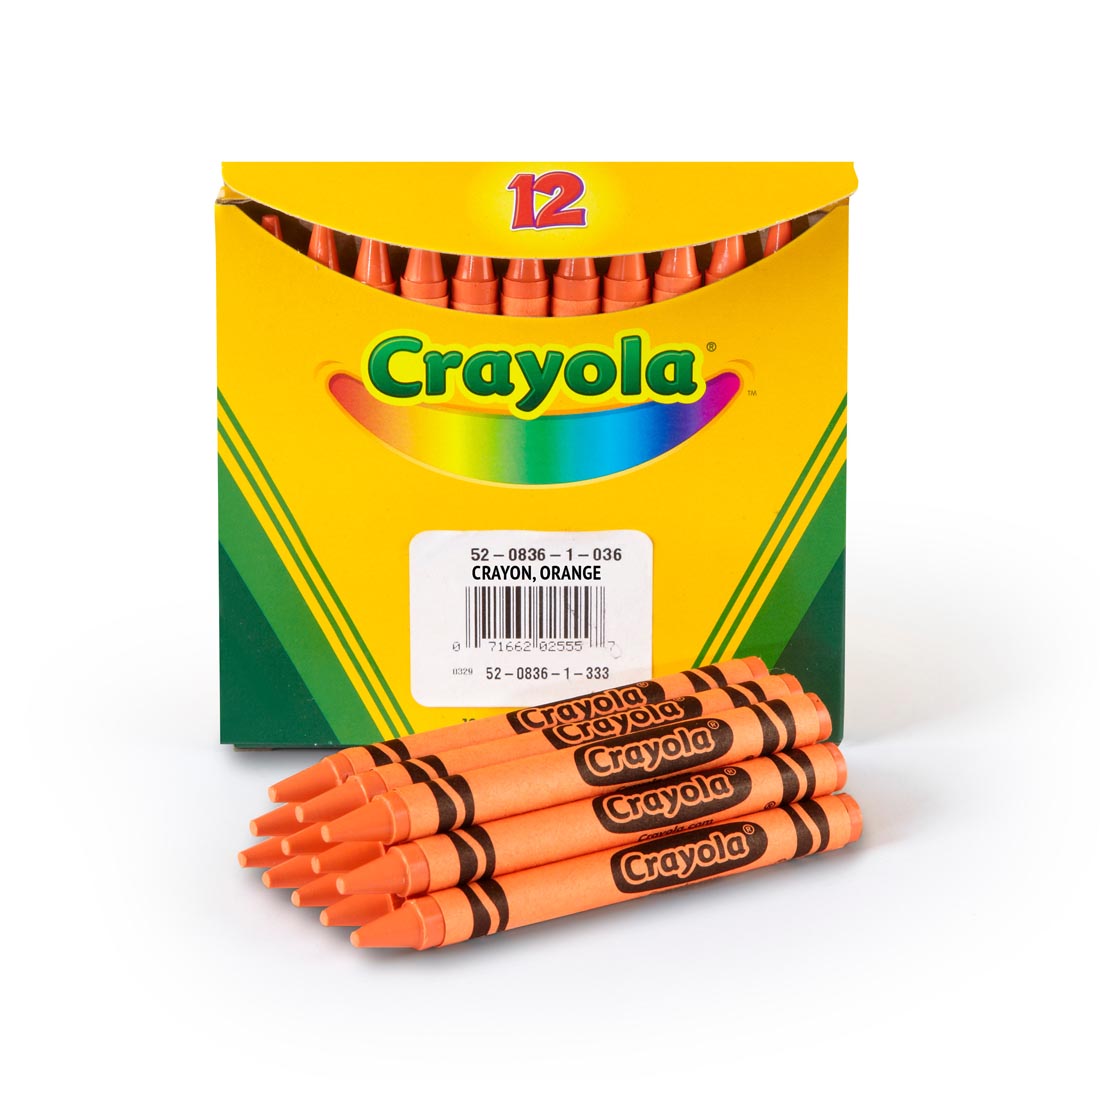 Box of Crayola Regular Crayon Refills with 12 Orange Crayons